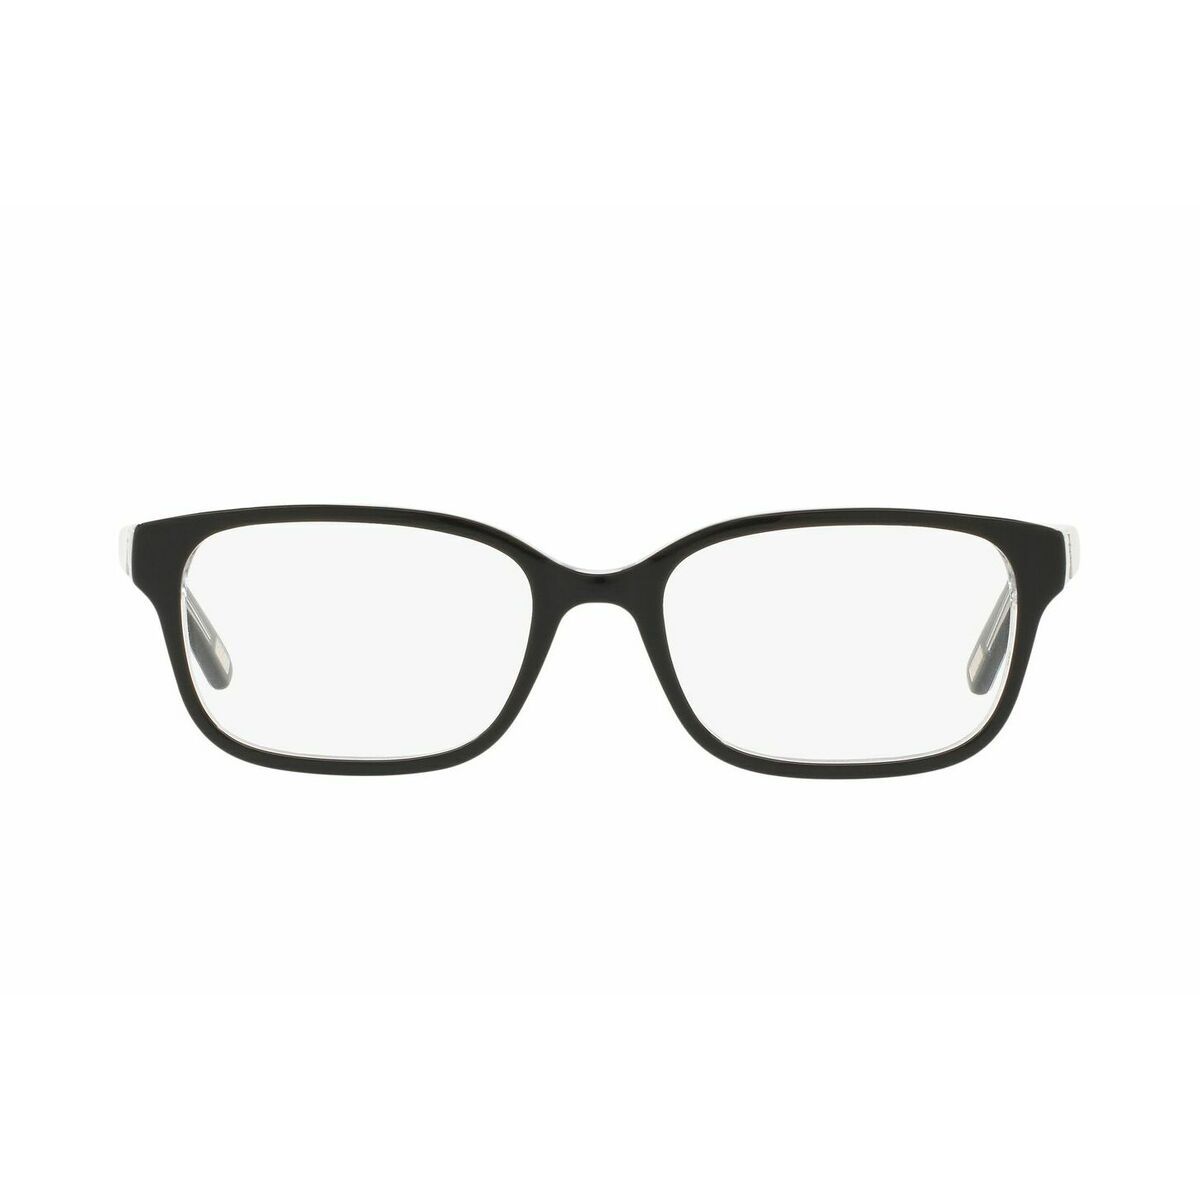 PP8520 Square Eyeglasses 541 - size  48